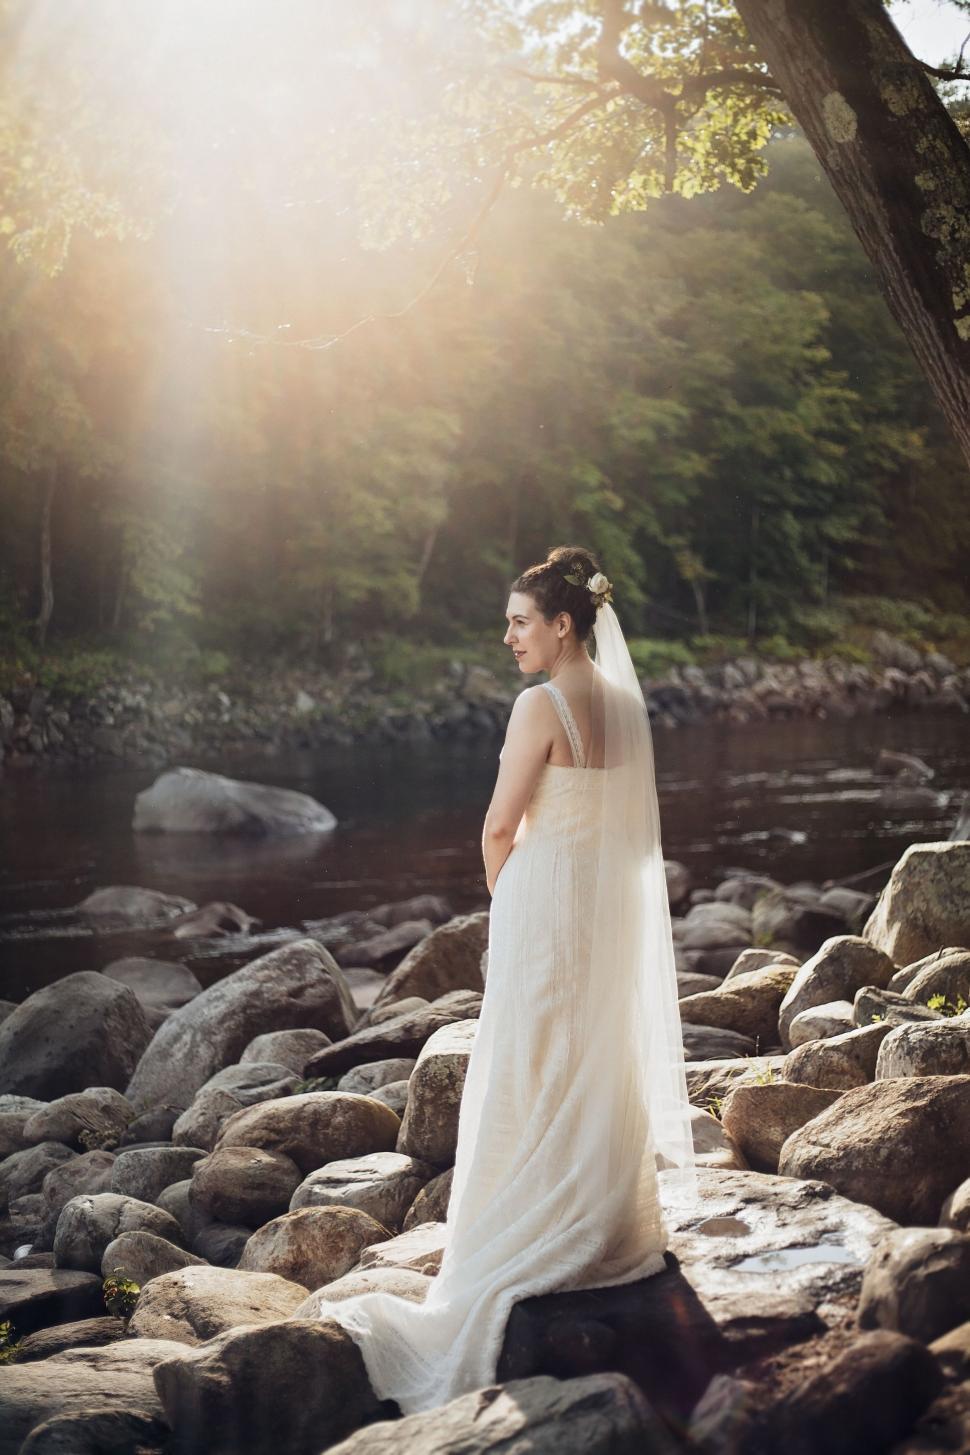 Free Image of Woman in Wedding Dress Standing on Rocks 